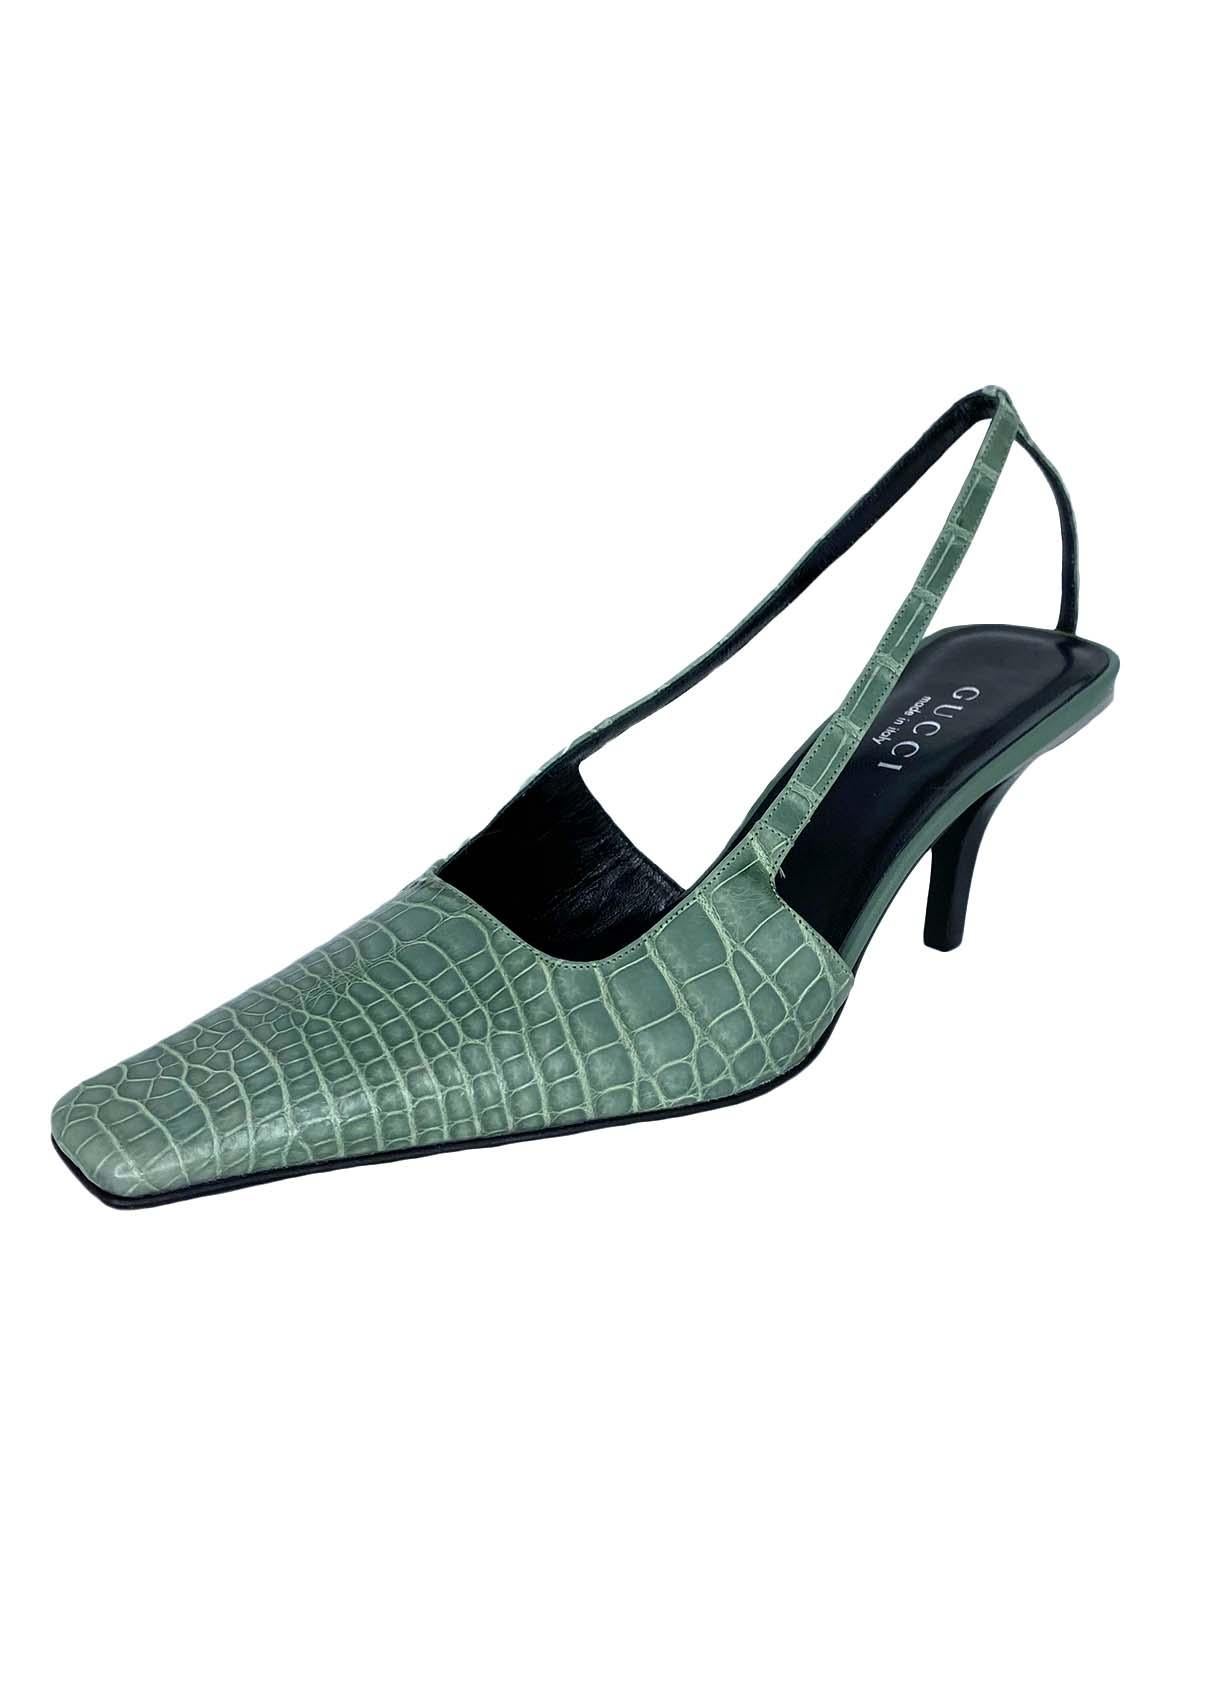 tom ford green heels